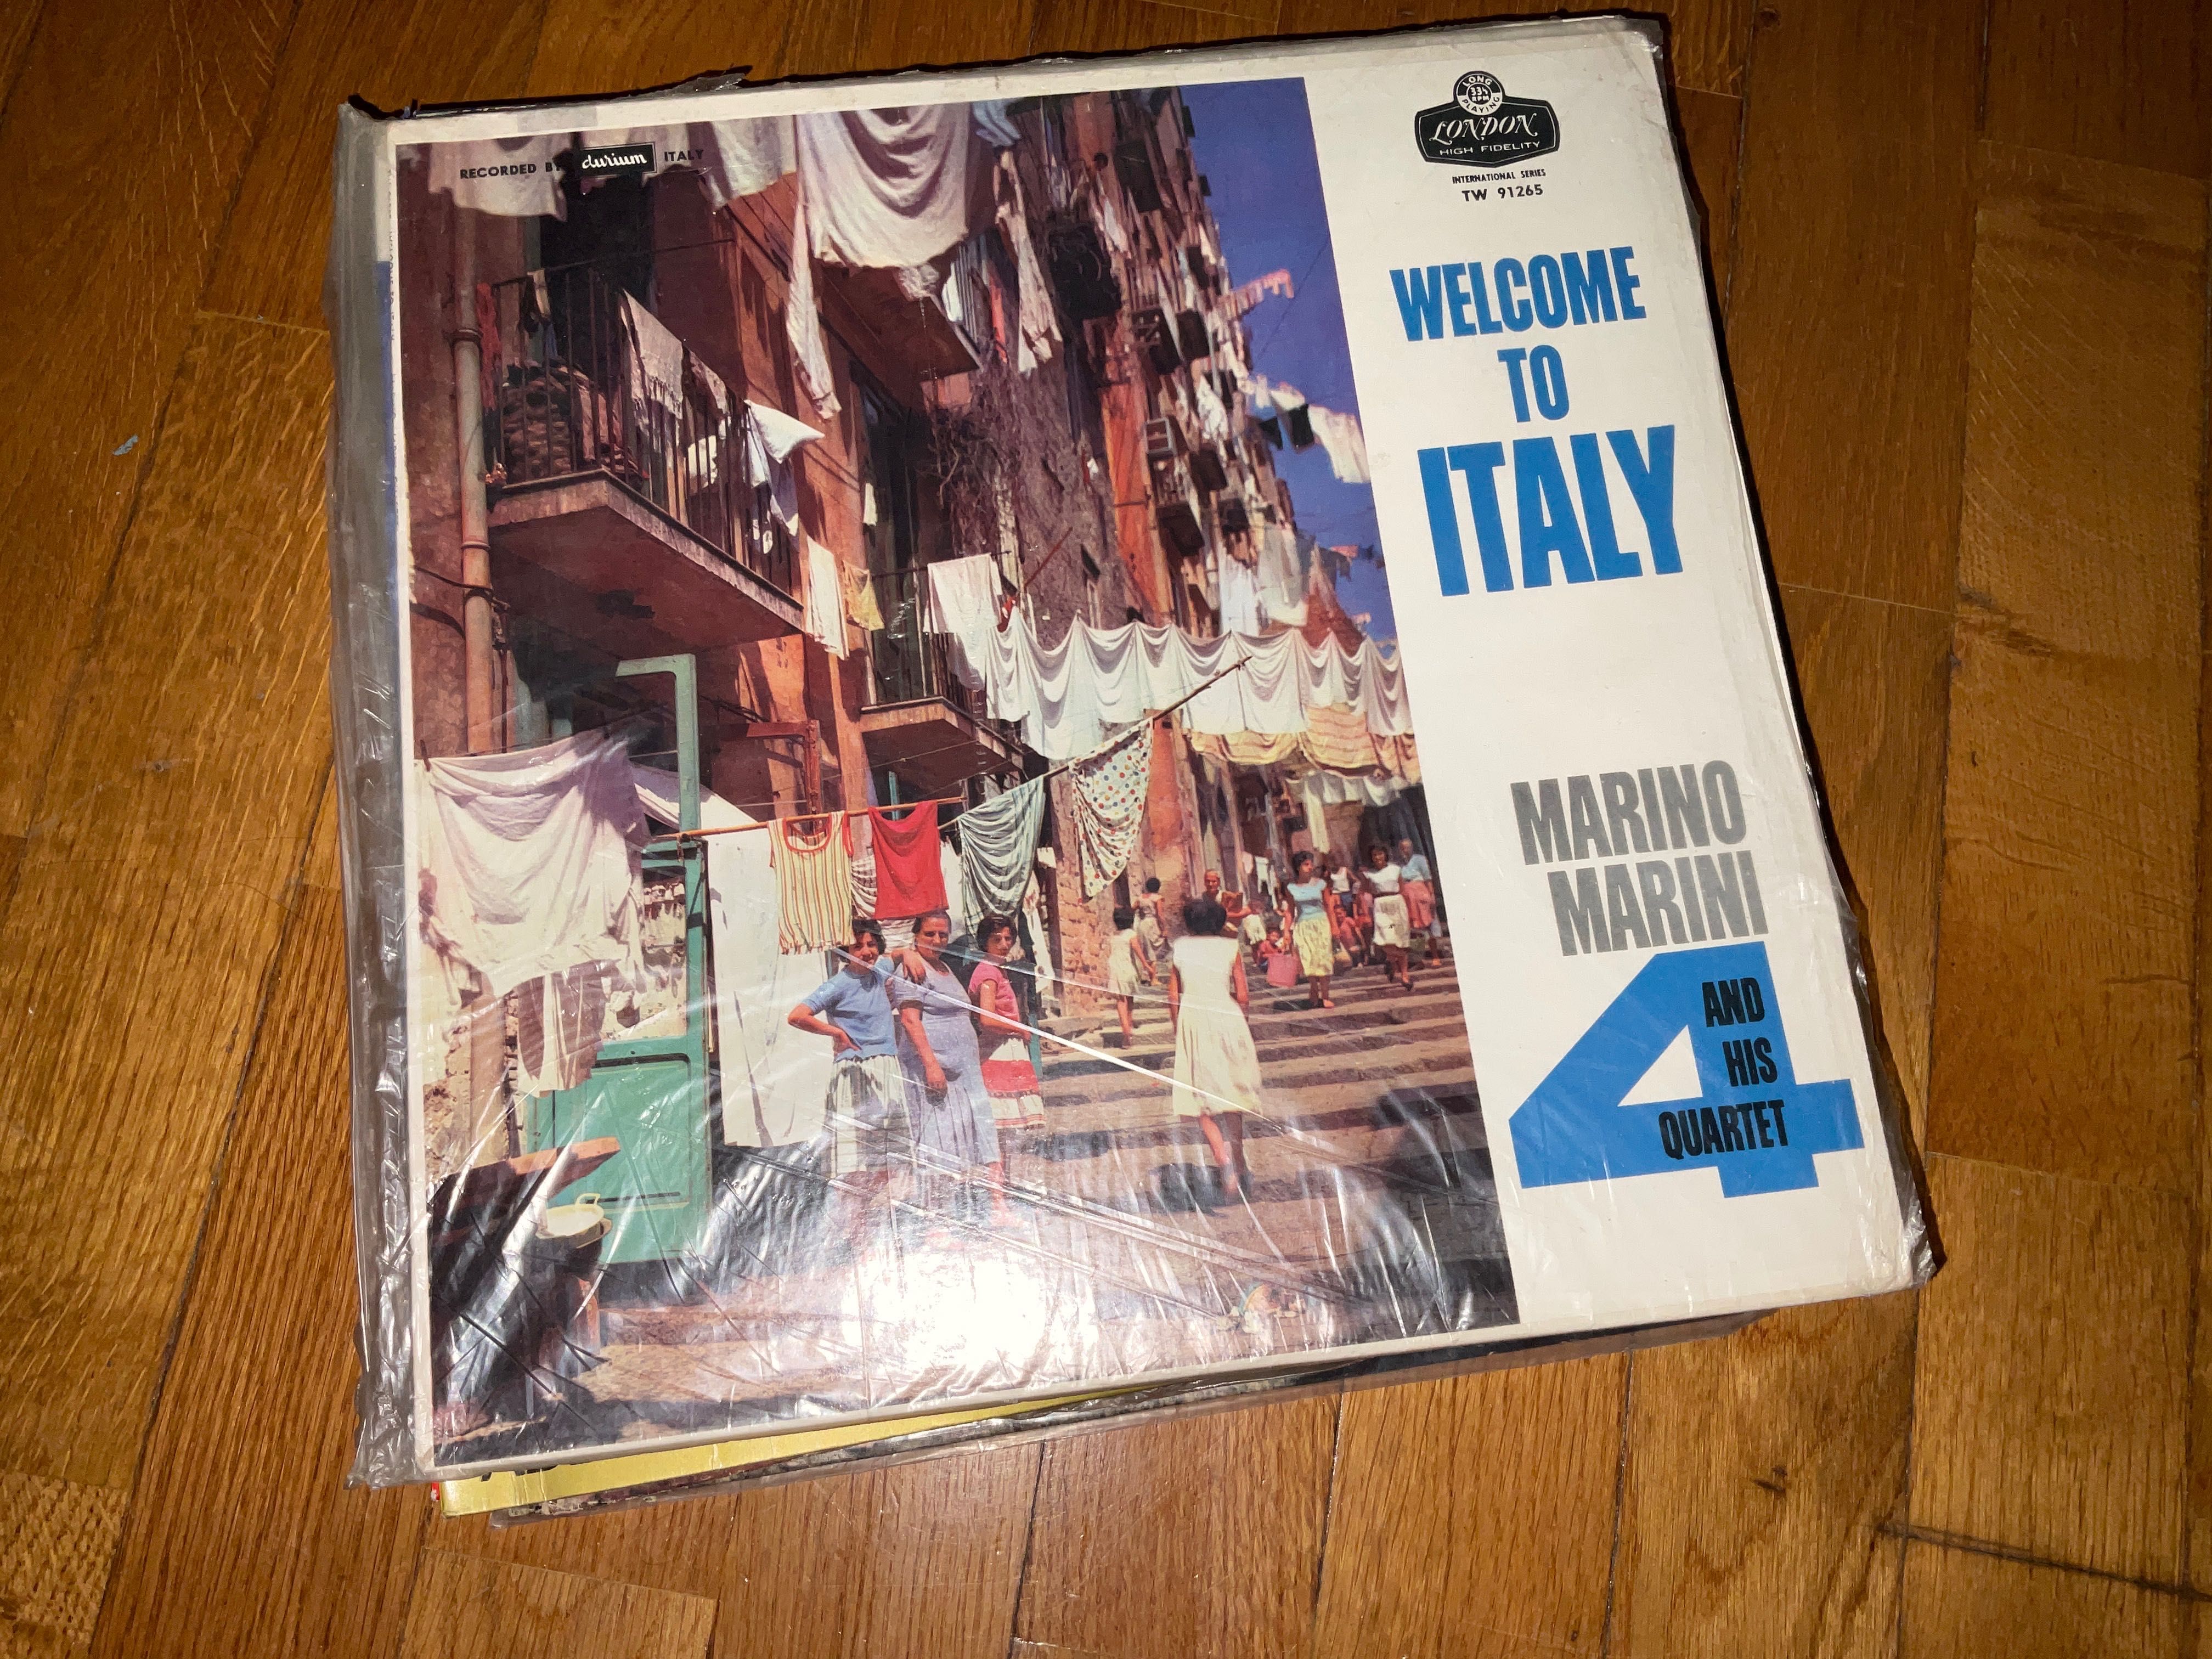 Lp Marino Marini and his quartet - welcome to Italy